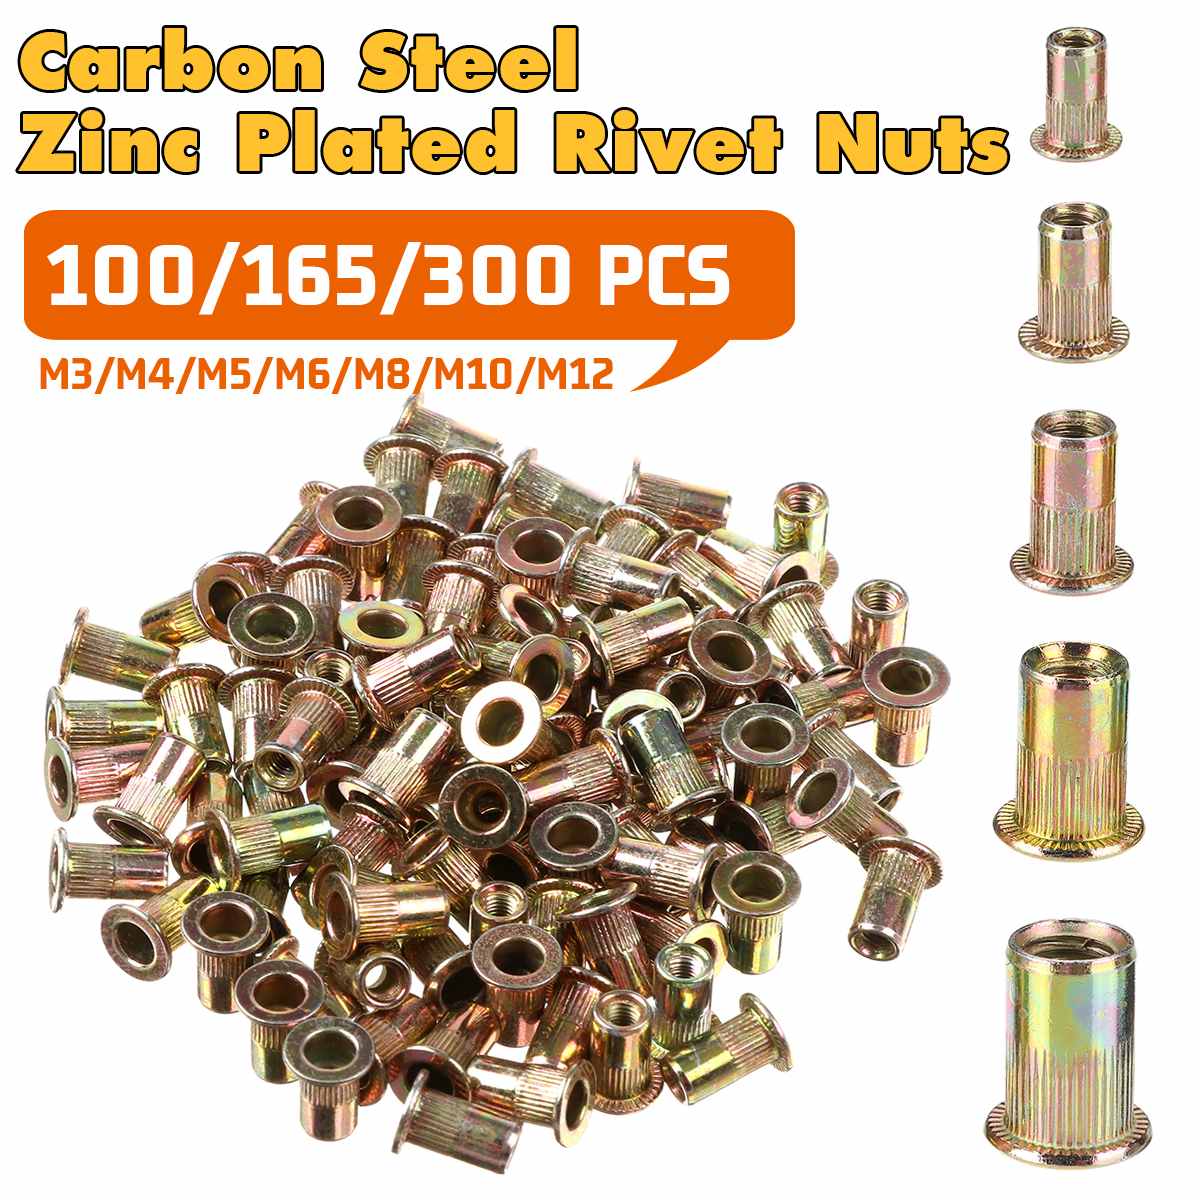 100/165/300 PCS Carbon Steel Zinc Plated Rivet Nuts Flat Head Threaded Rivet Insert Nutsert Rivet Nut Assortment Kit M3 to M12